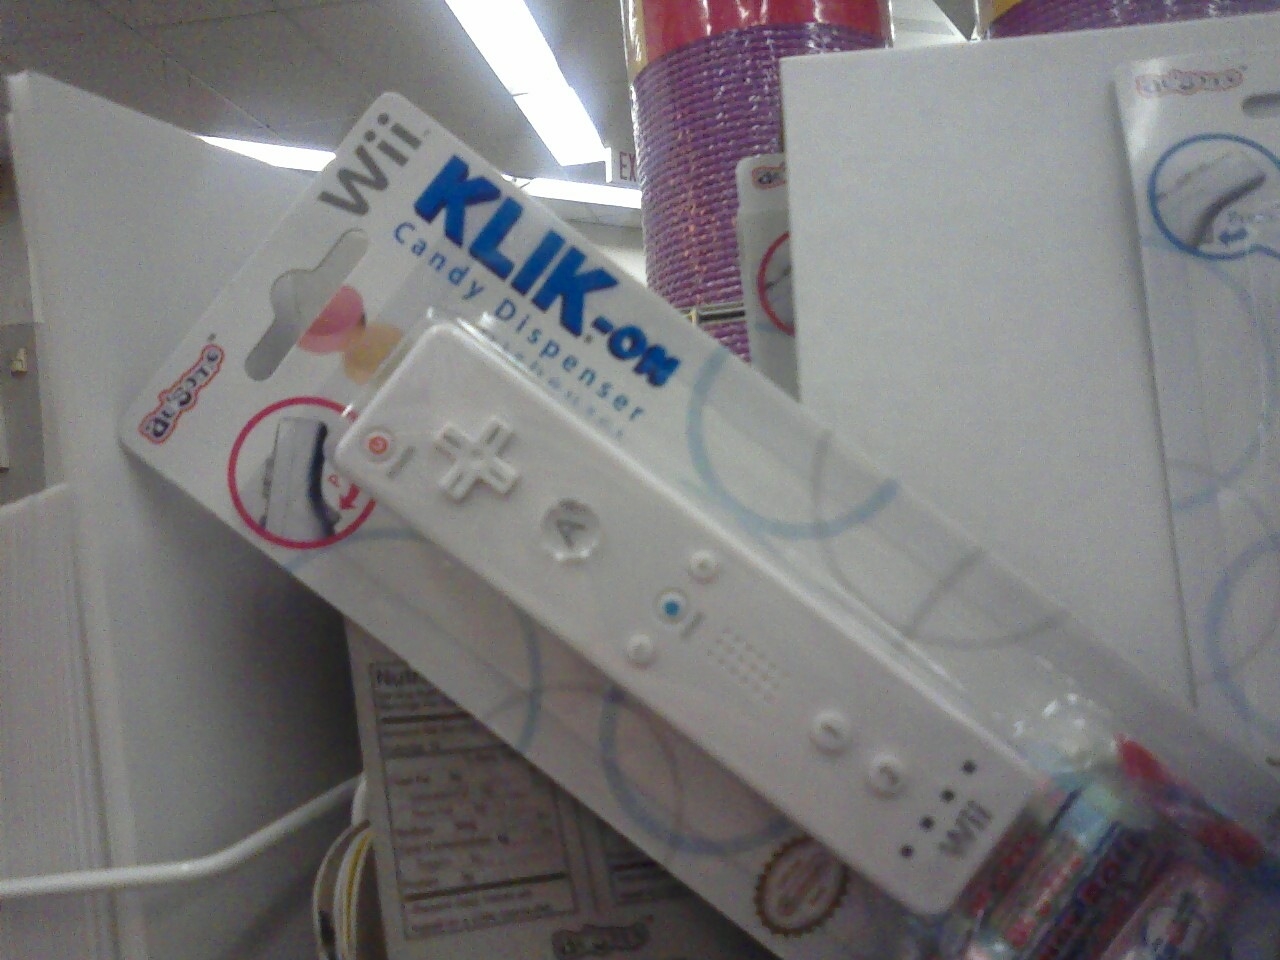 Wii Remote Fake Pez Dispensers